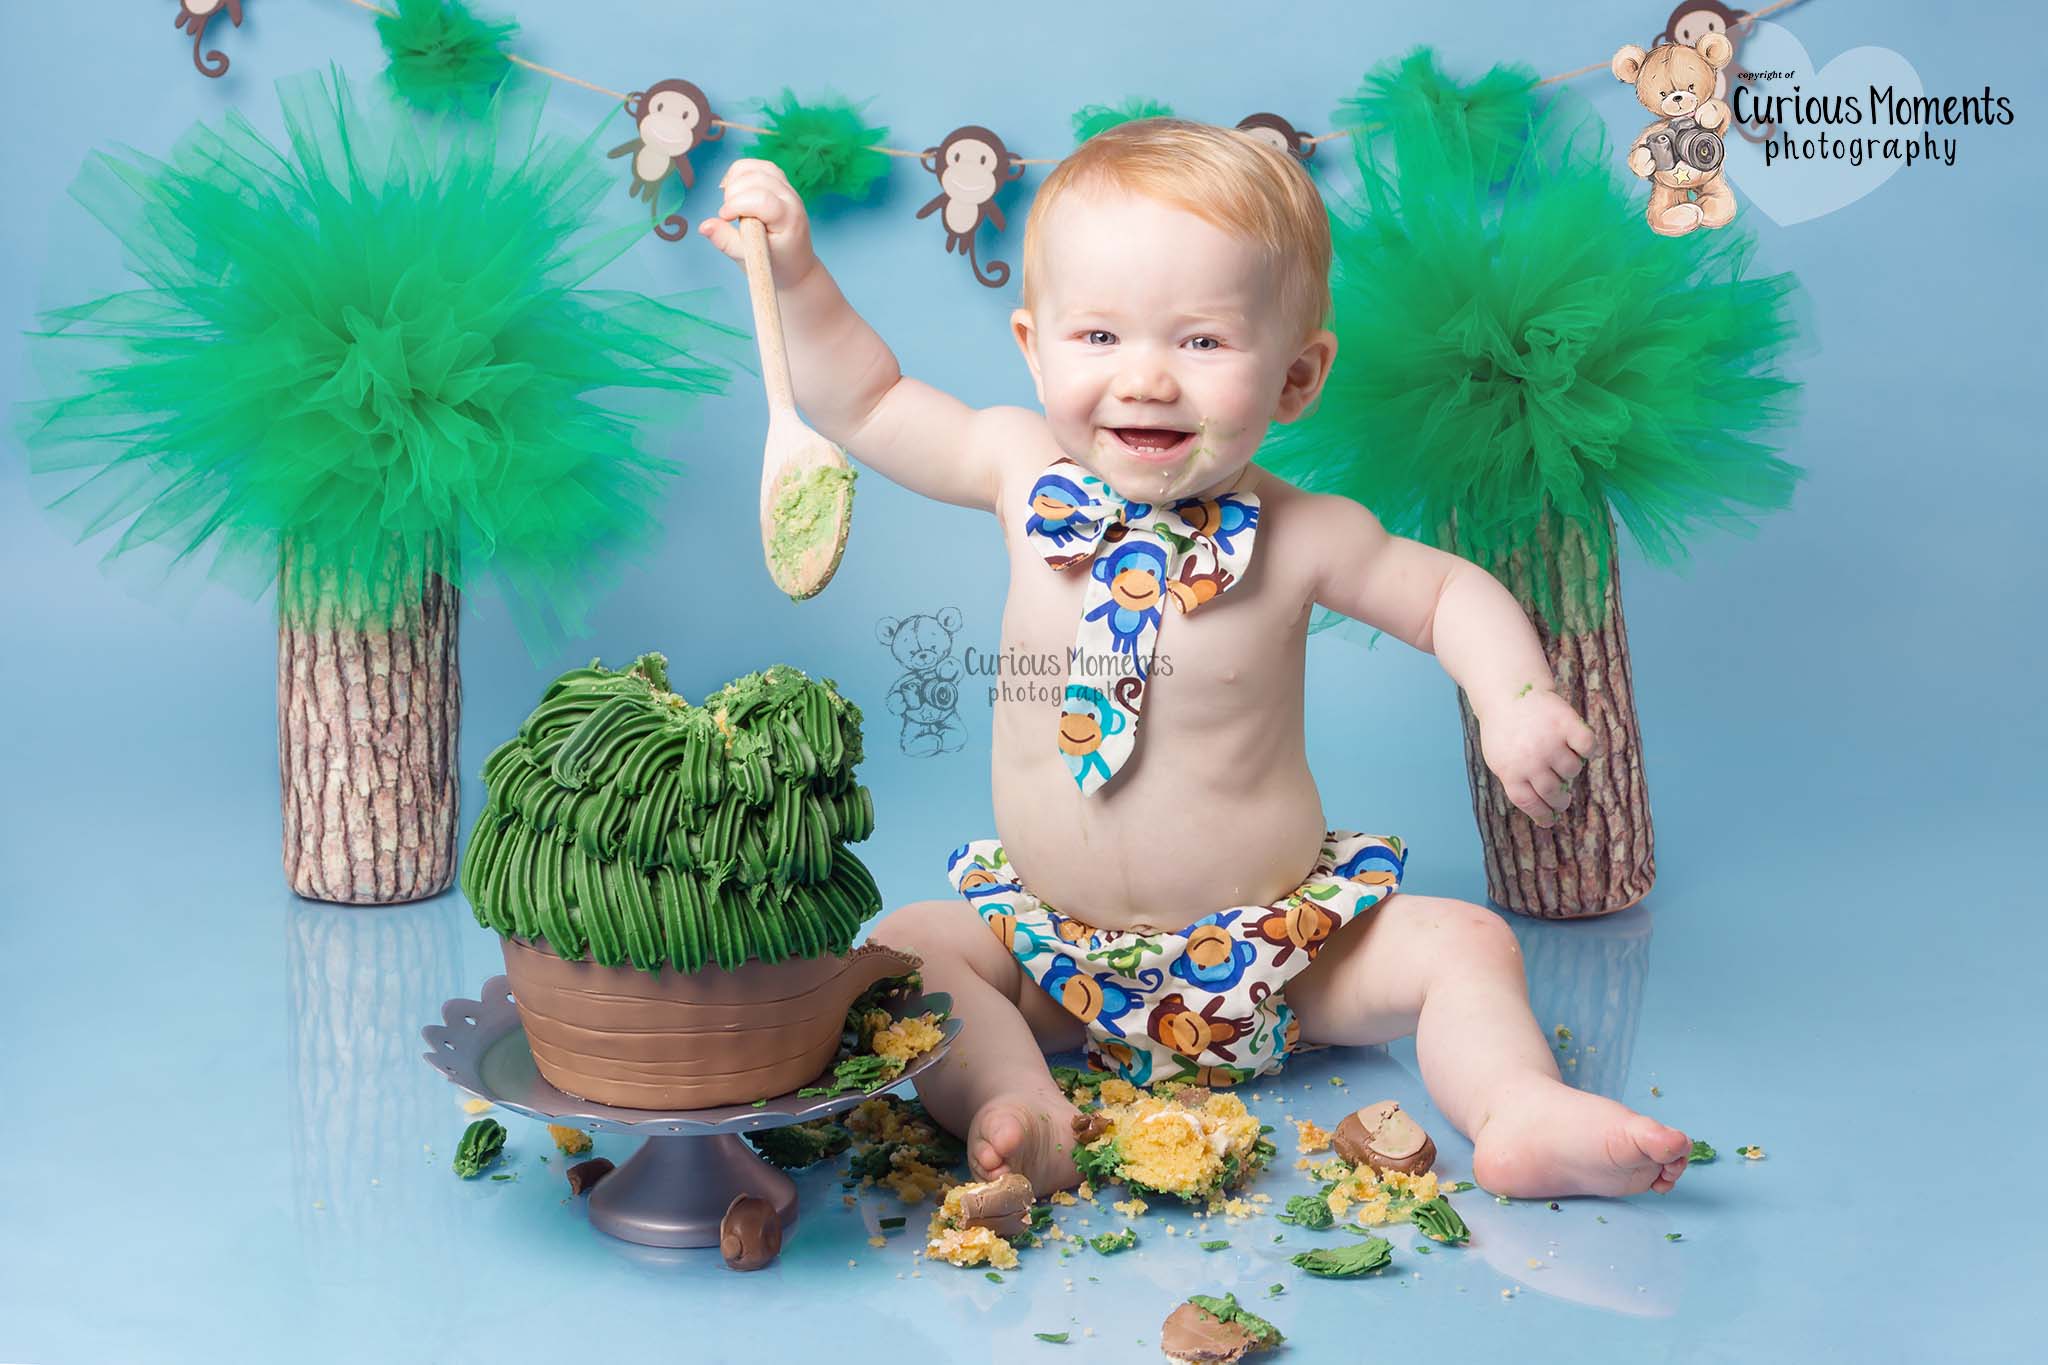 !st birthday photoshoot for little boy on blue background with ajungle Monkey themed cake smash with carmarthen photographer